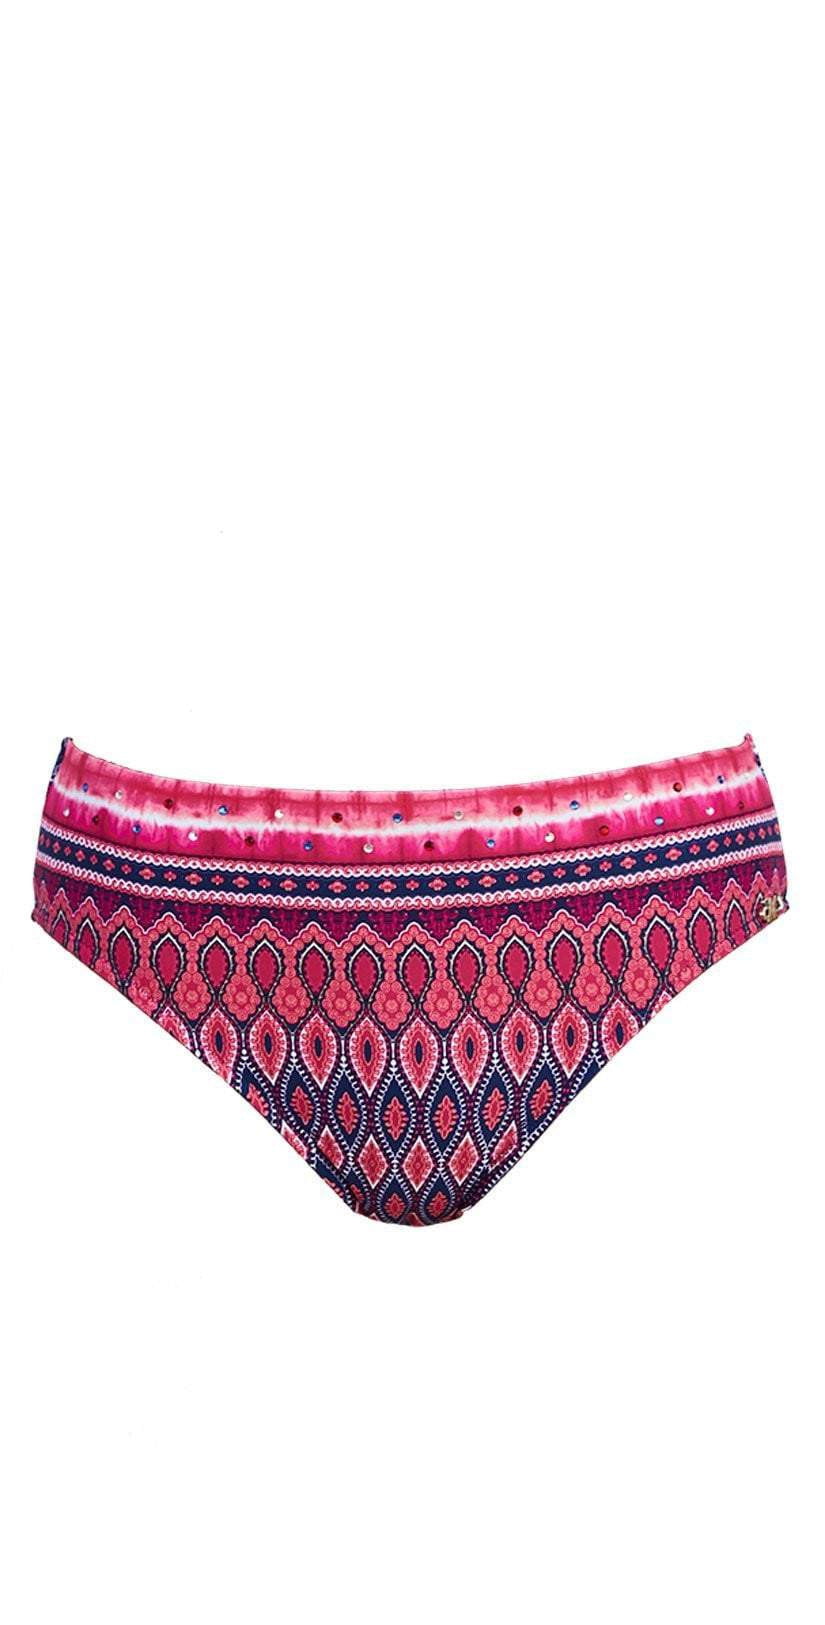 Nuria Ferrer Alhambra Bikini Bottom 27043-2 – South Beach Swimsuits